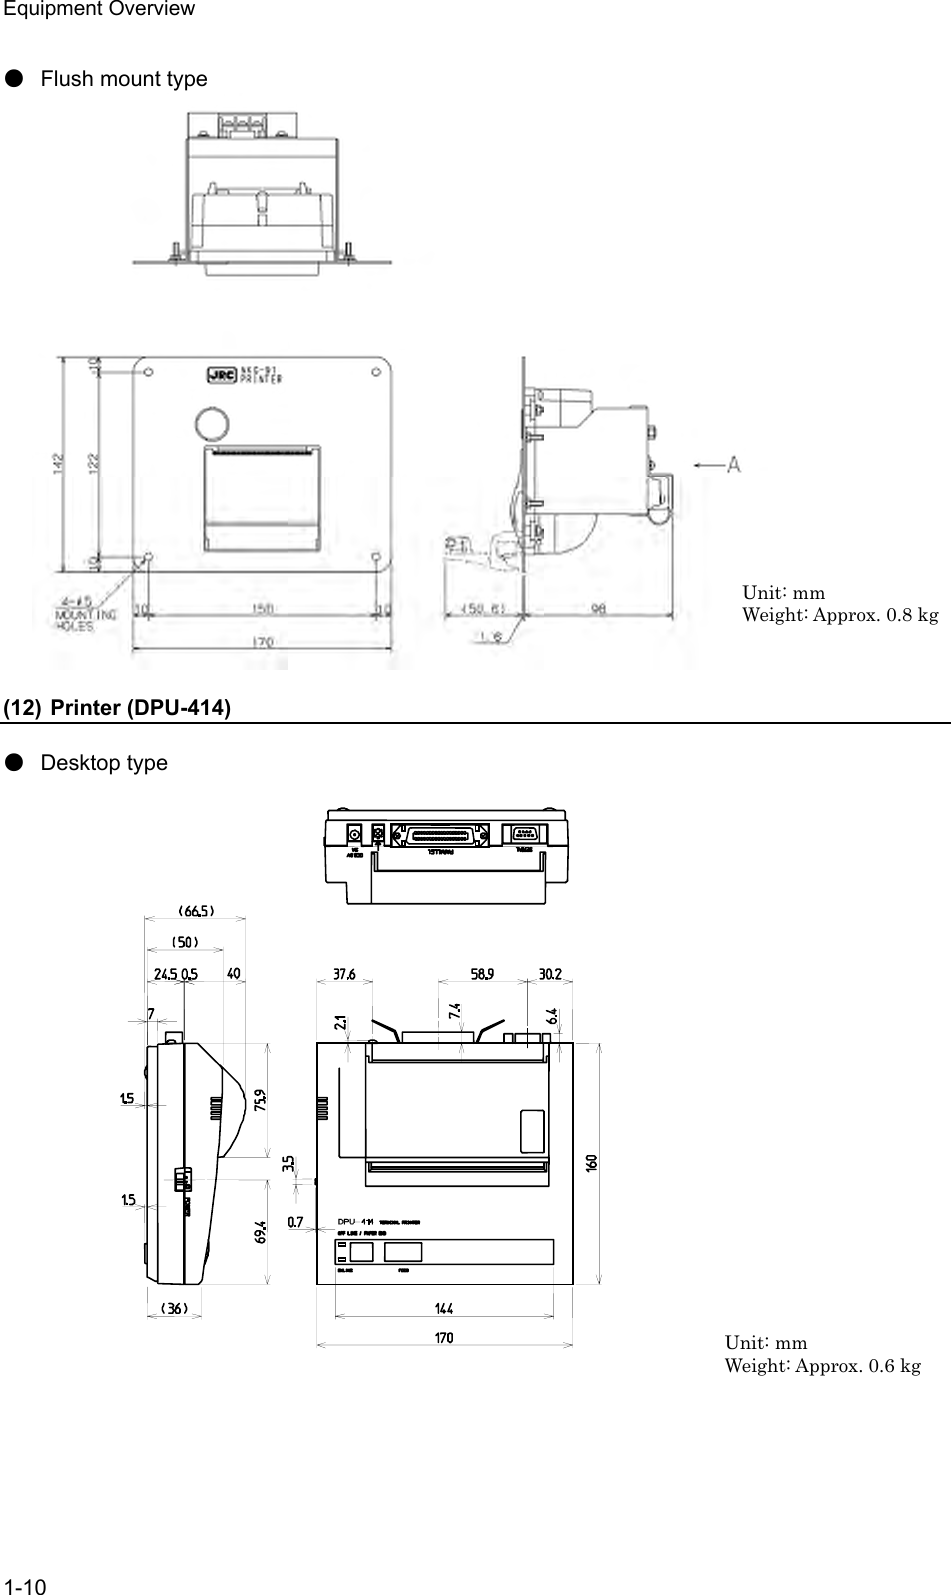 Equipment Overview 1-10  ● Flush mount type                         (12) Printer (DPU-414)  ● Desktop type                             Unit: mm Weight: Approx. 0.6 kg Unit: mm Weight: Approx. 0.8 kg 